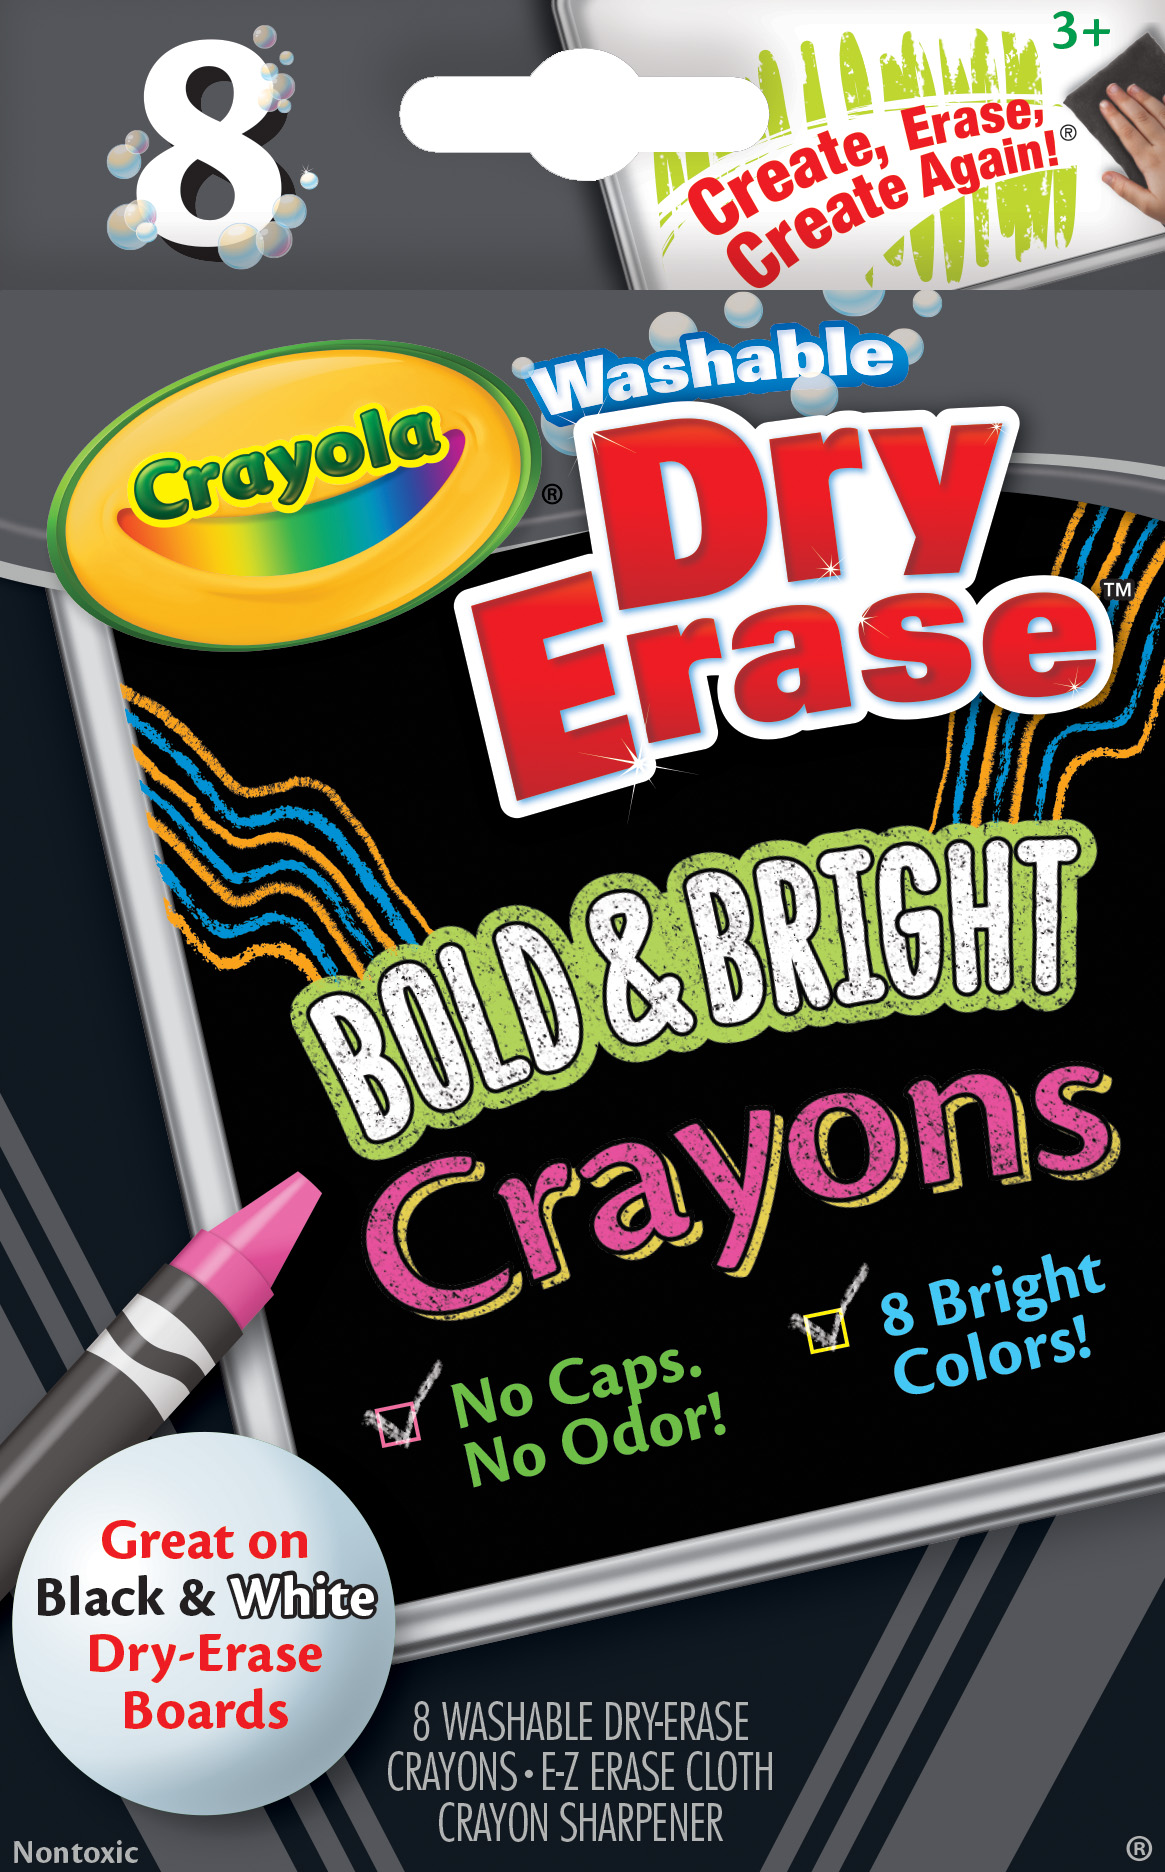 Dry Erase